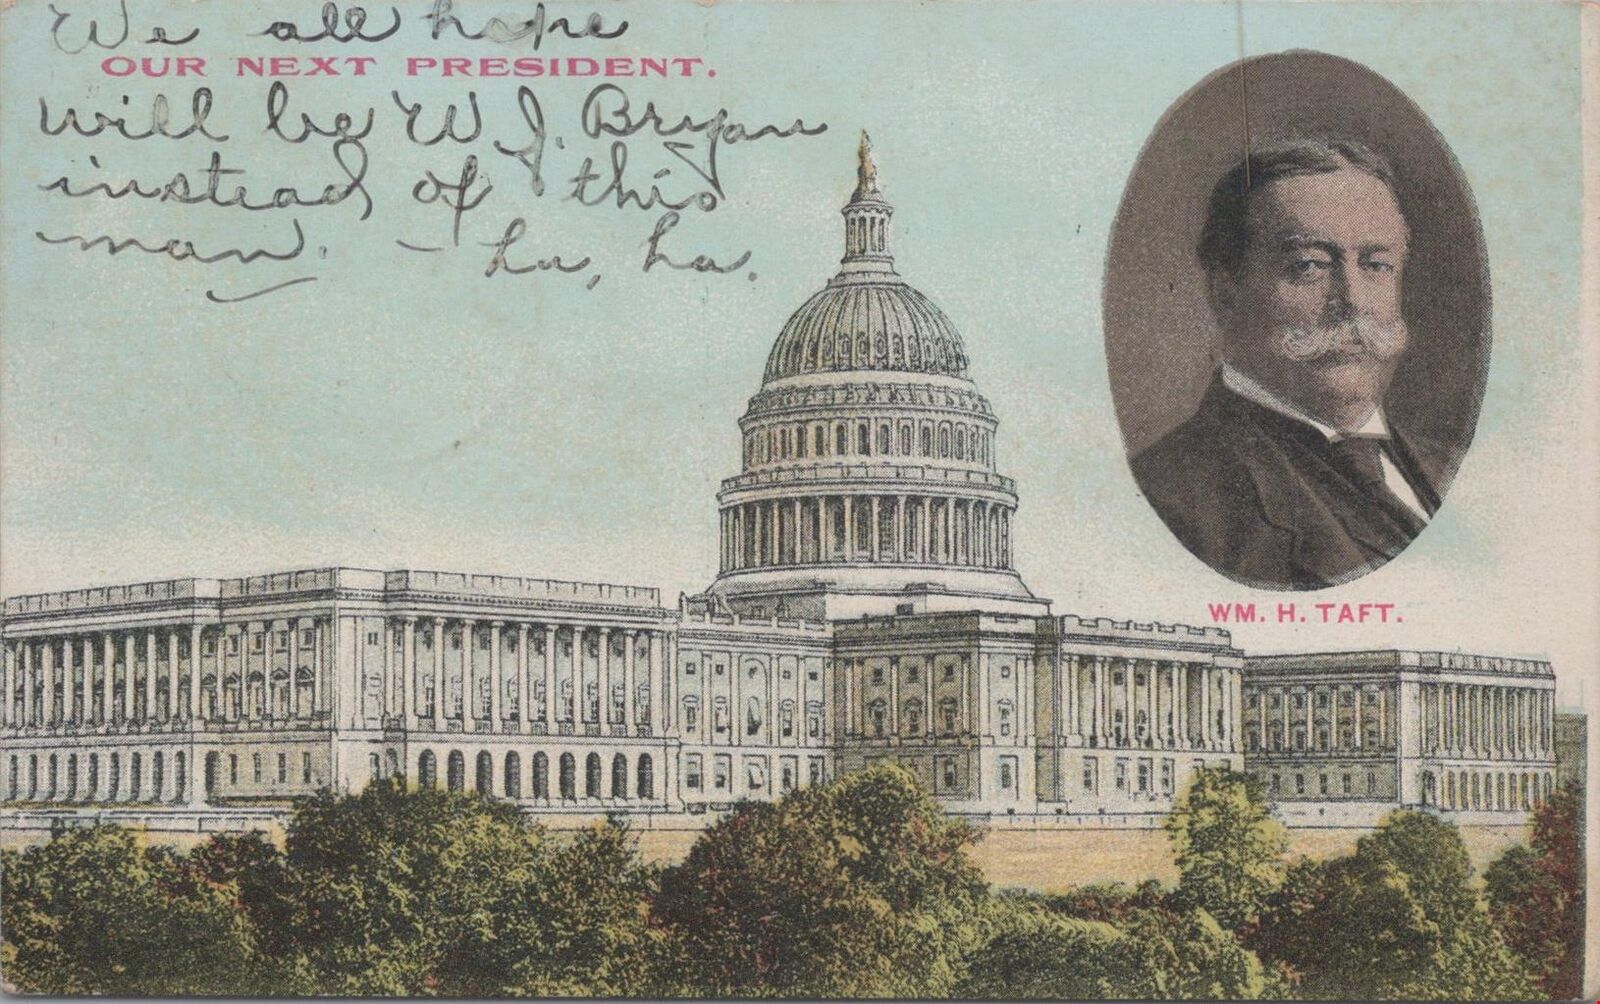 Political Postcard Wm H Taft Our Next President 1908